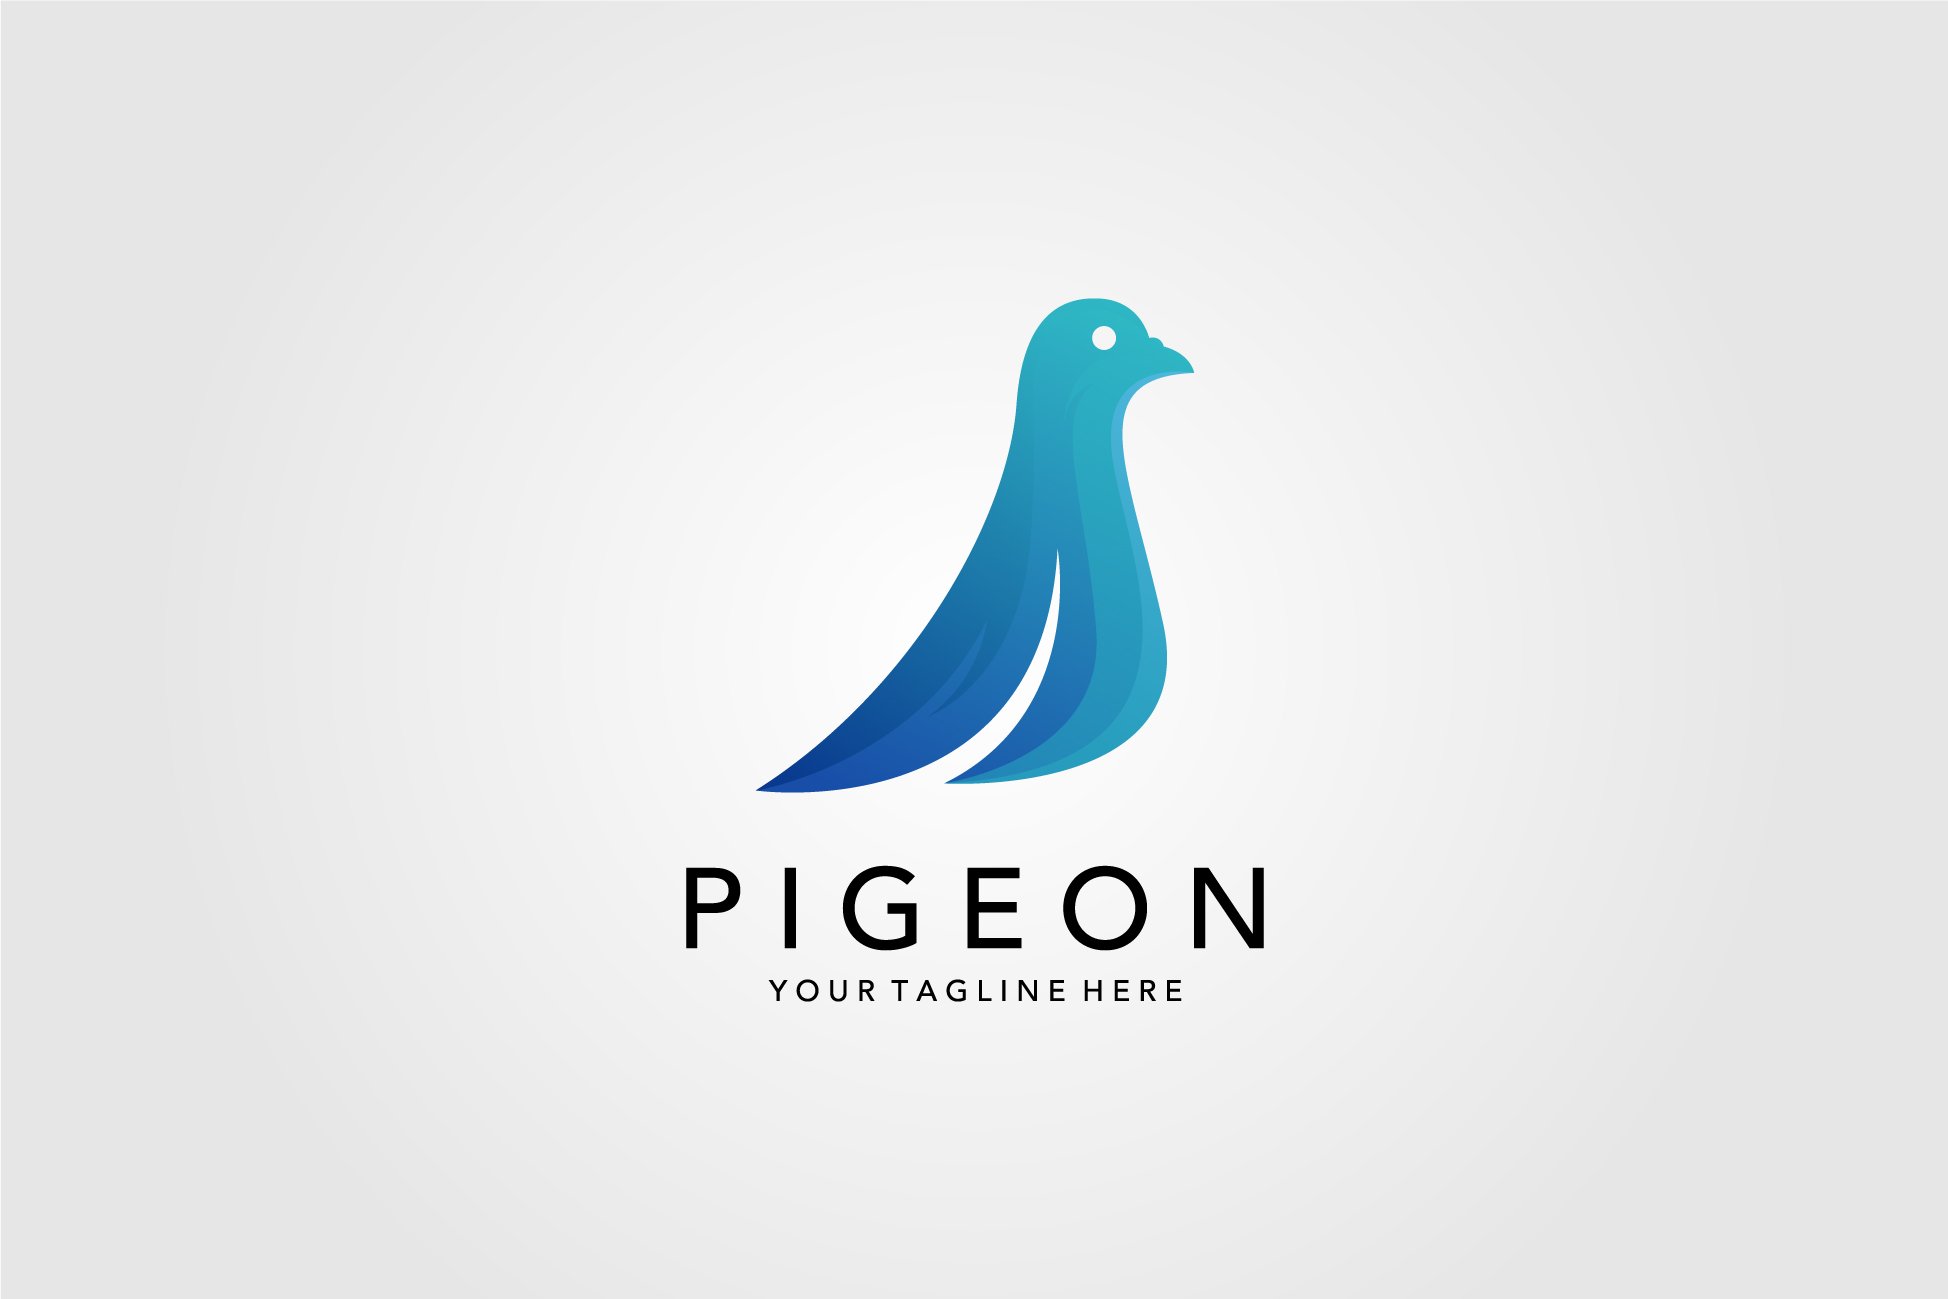 Premium Vector | Pigeon logo design, dove logo design, eps10